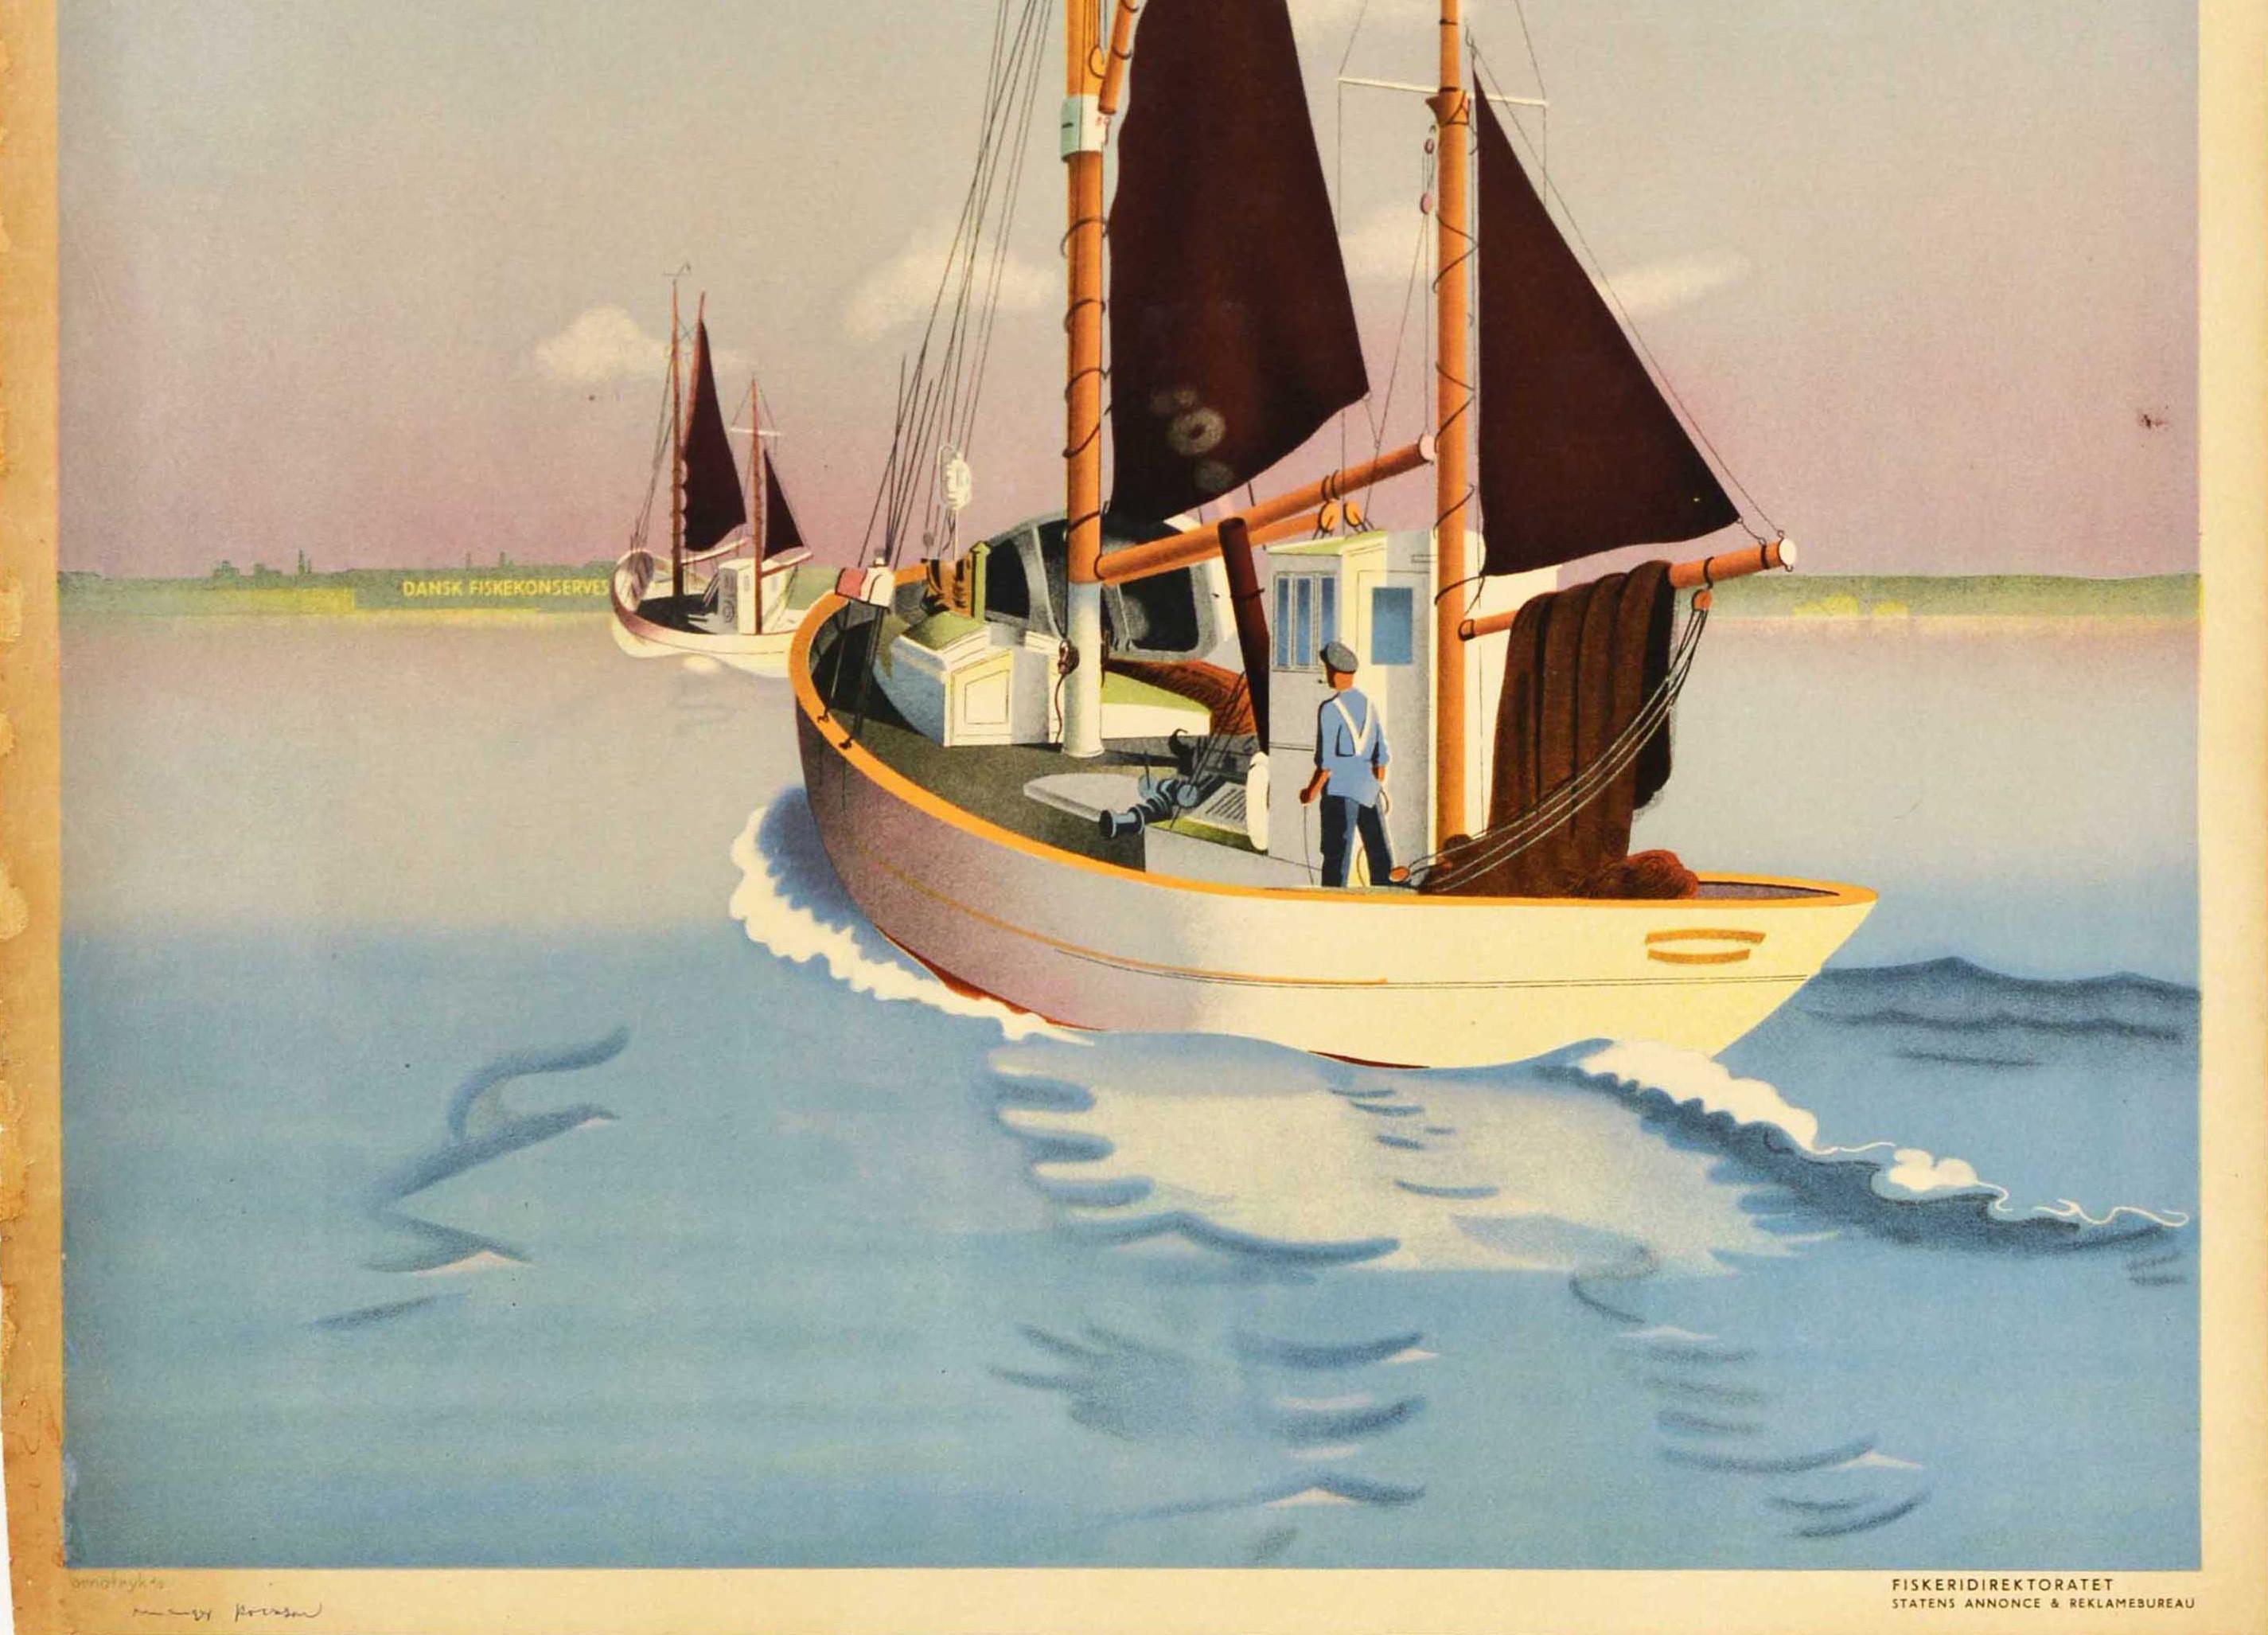 Danish Original Vintage Advertising Poster Friskfanget Fisk Fresh Fish Denmark Boat Art For Sale